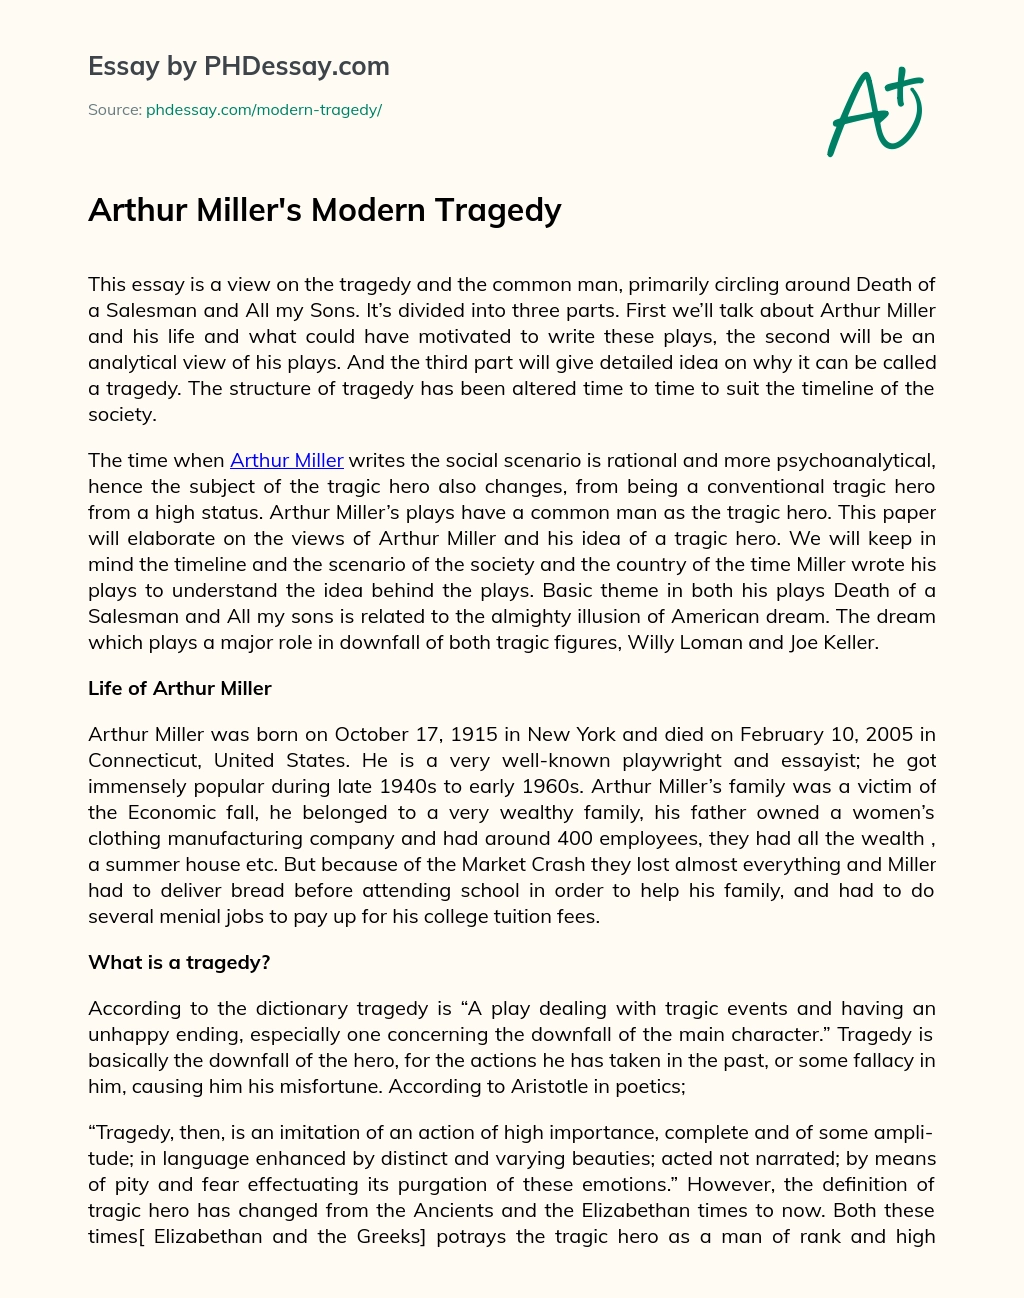 Arthur Miller’s Modern Tragedy essay